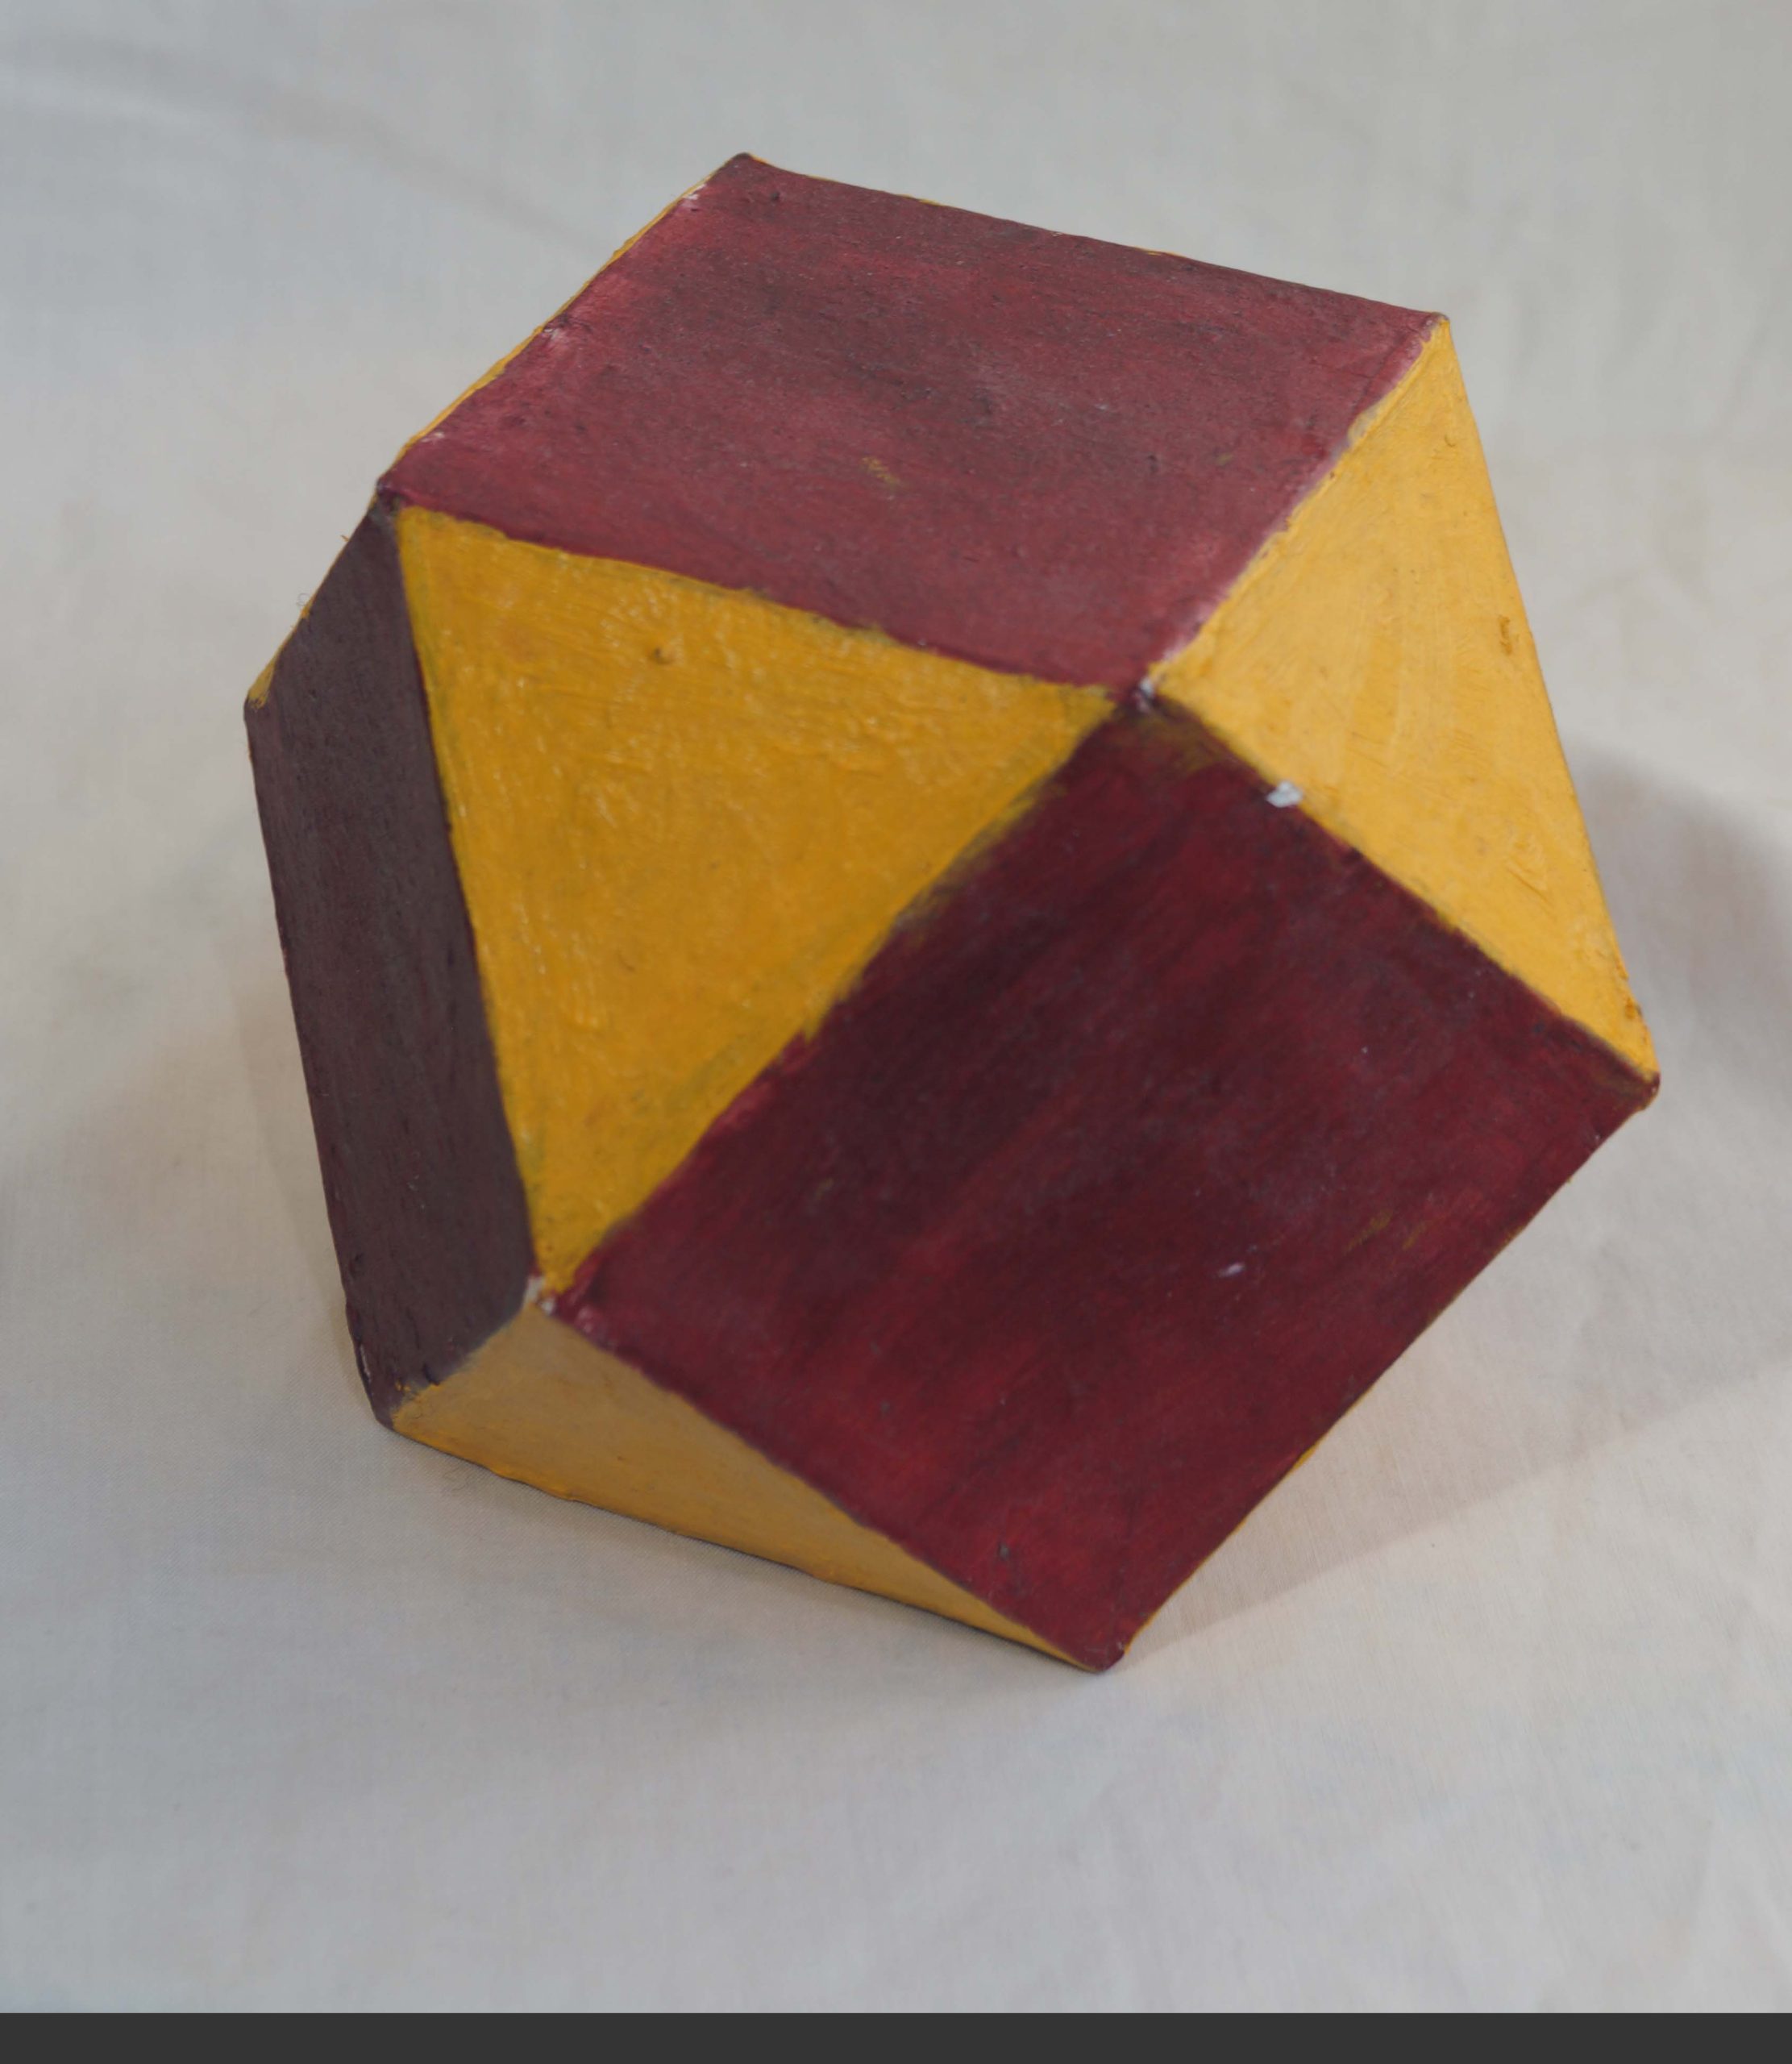 Cubeoctahedron